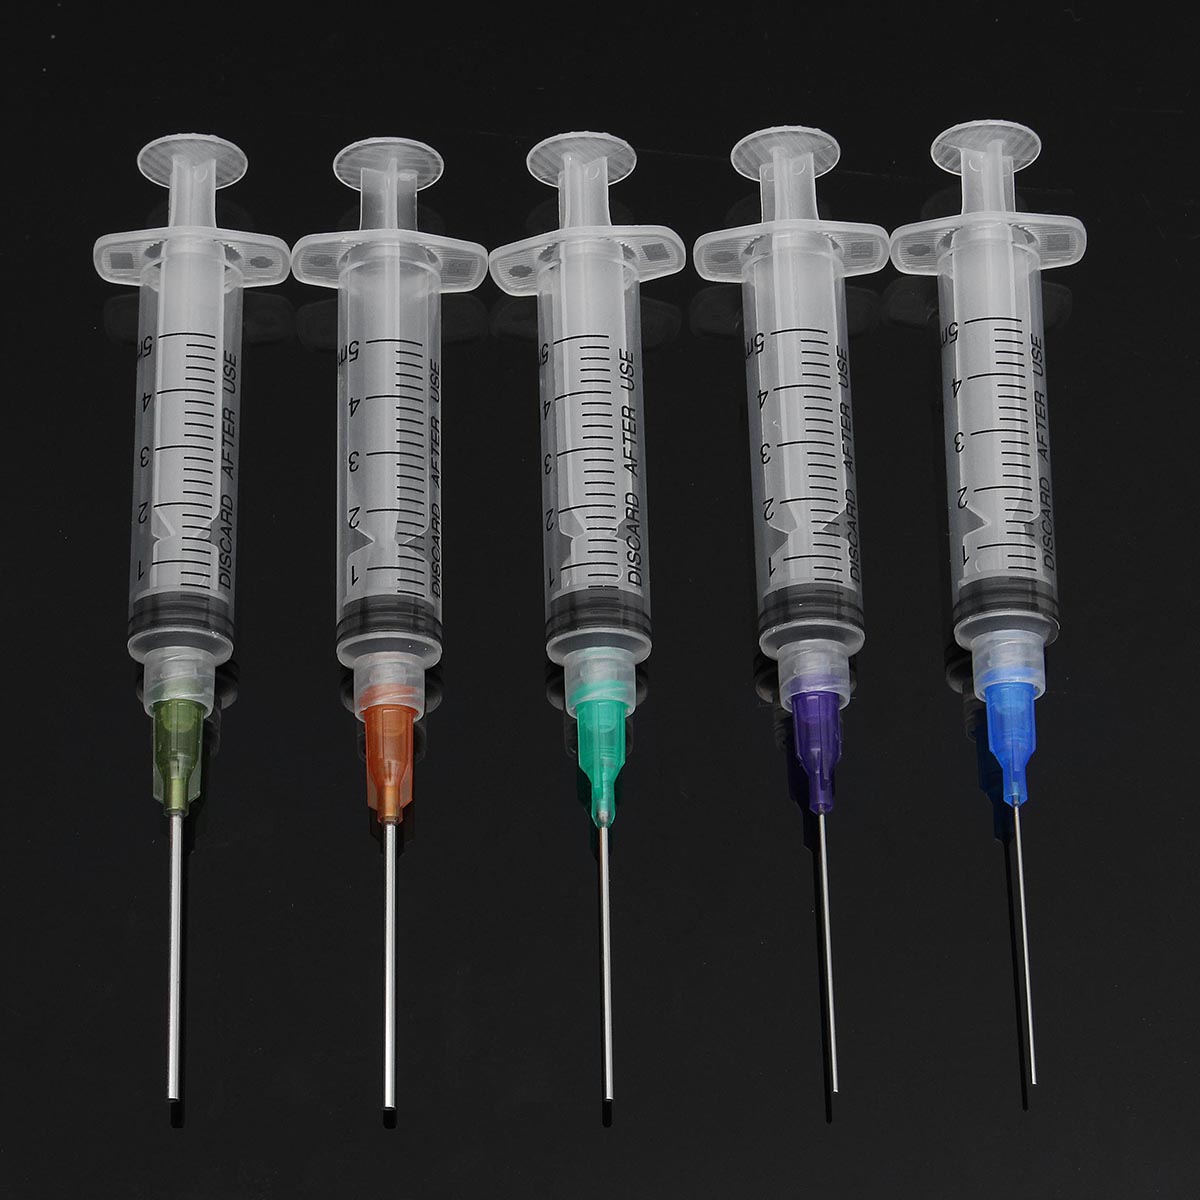 5pcs 5ml Syringe Dispensing Needle Kits for Refilling and Measuring Liquids